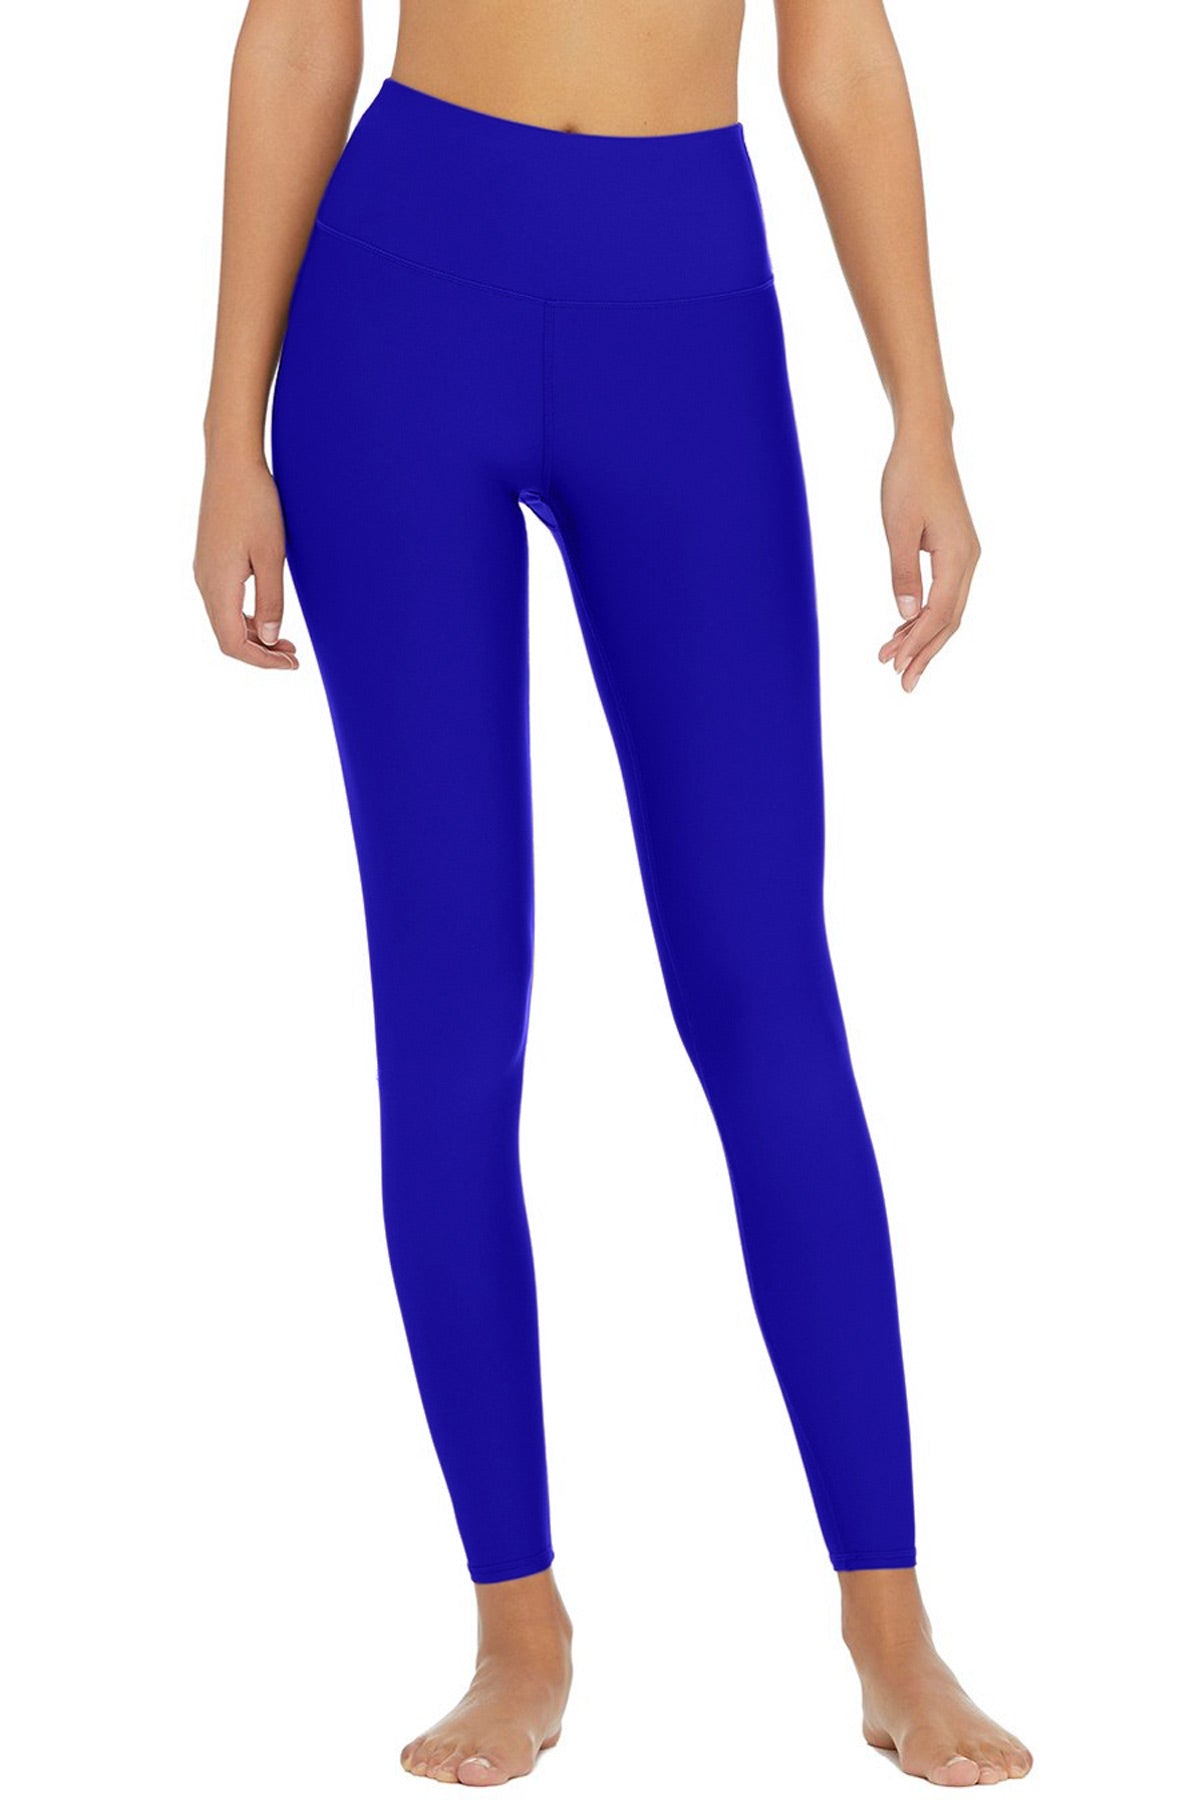 Royal Blue UV 50+ Lucy Vivid Performance Leggings Yoga Pants - Women - Pineapple Clothing